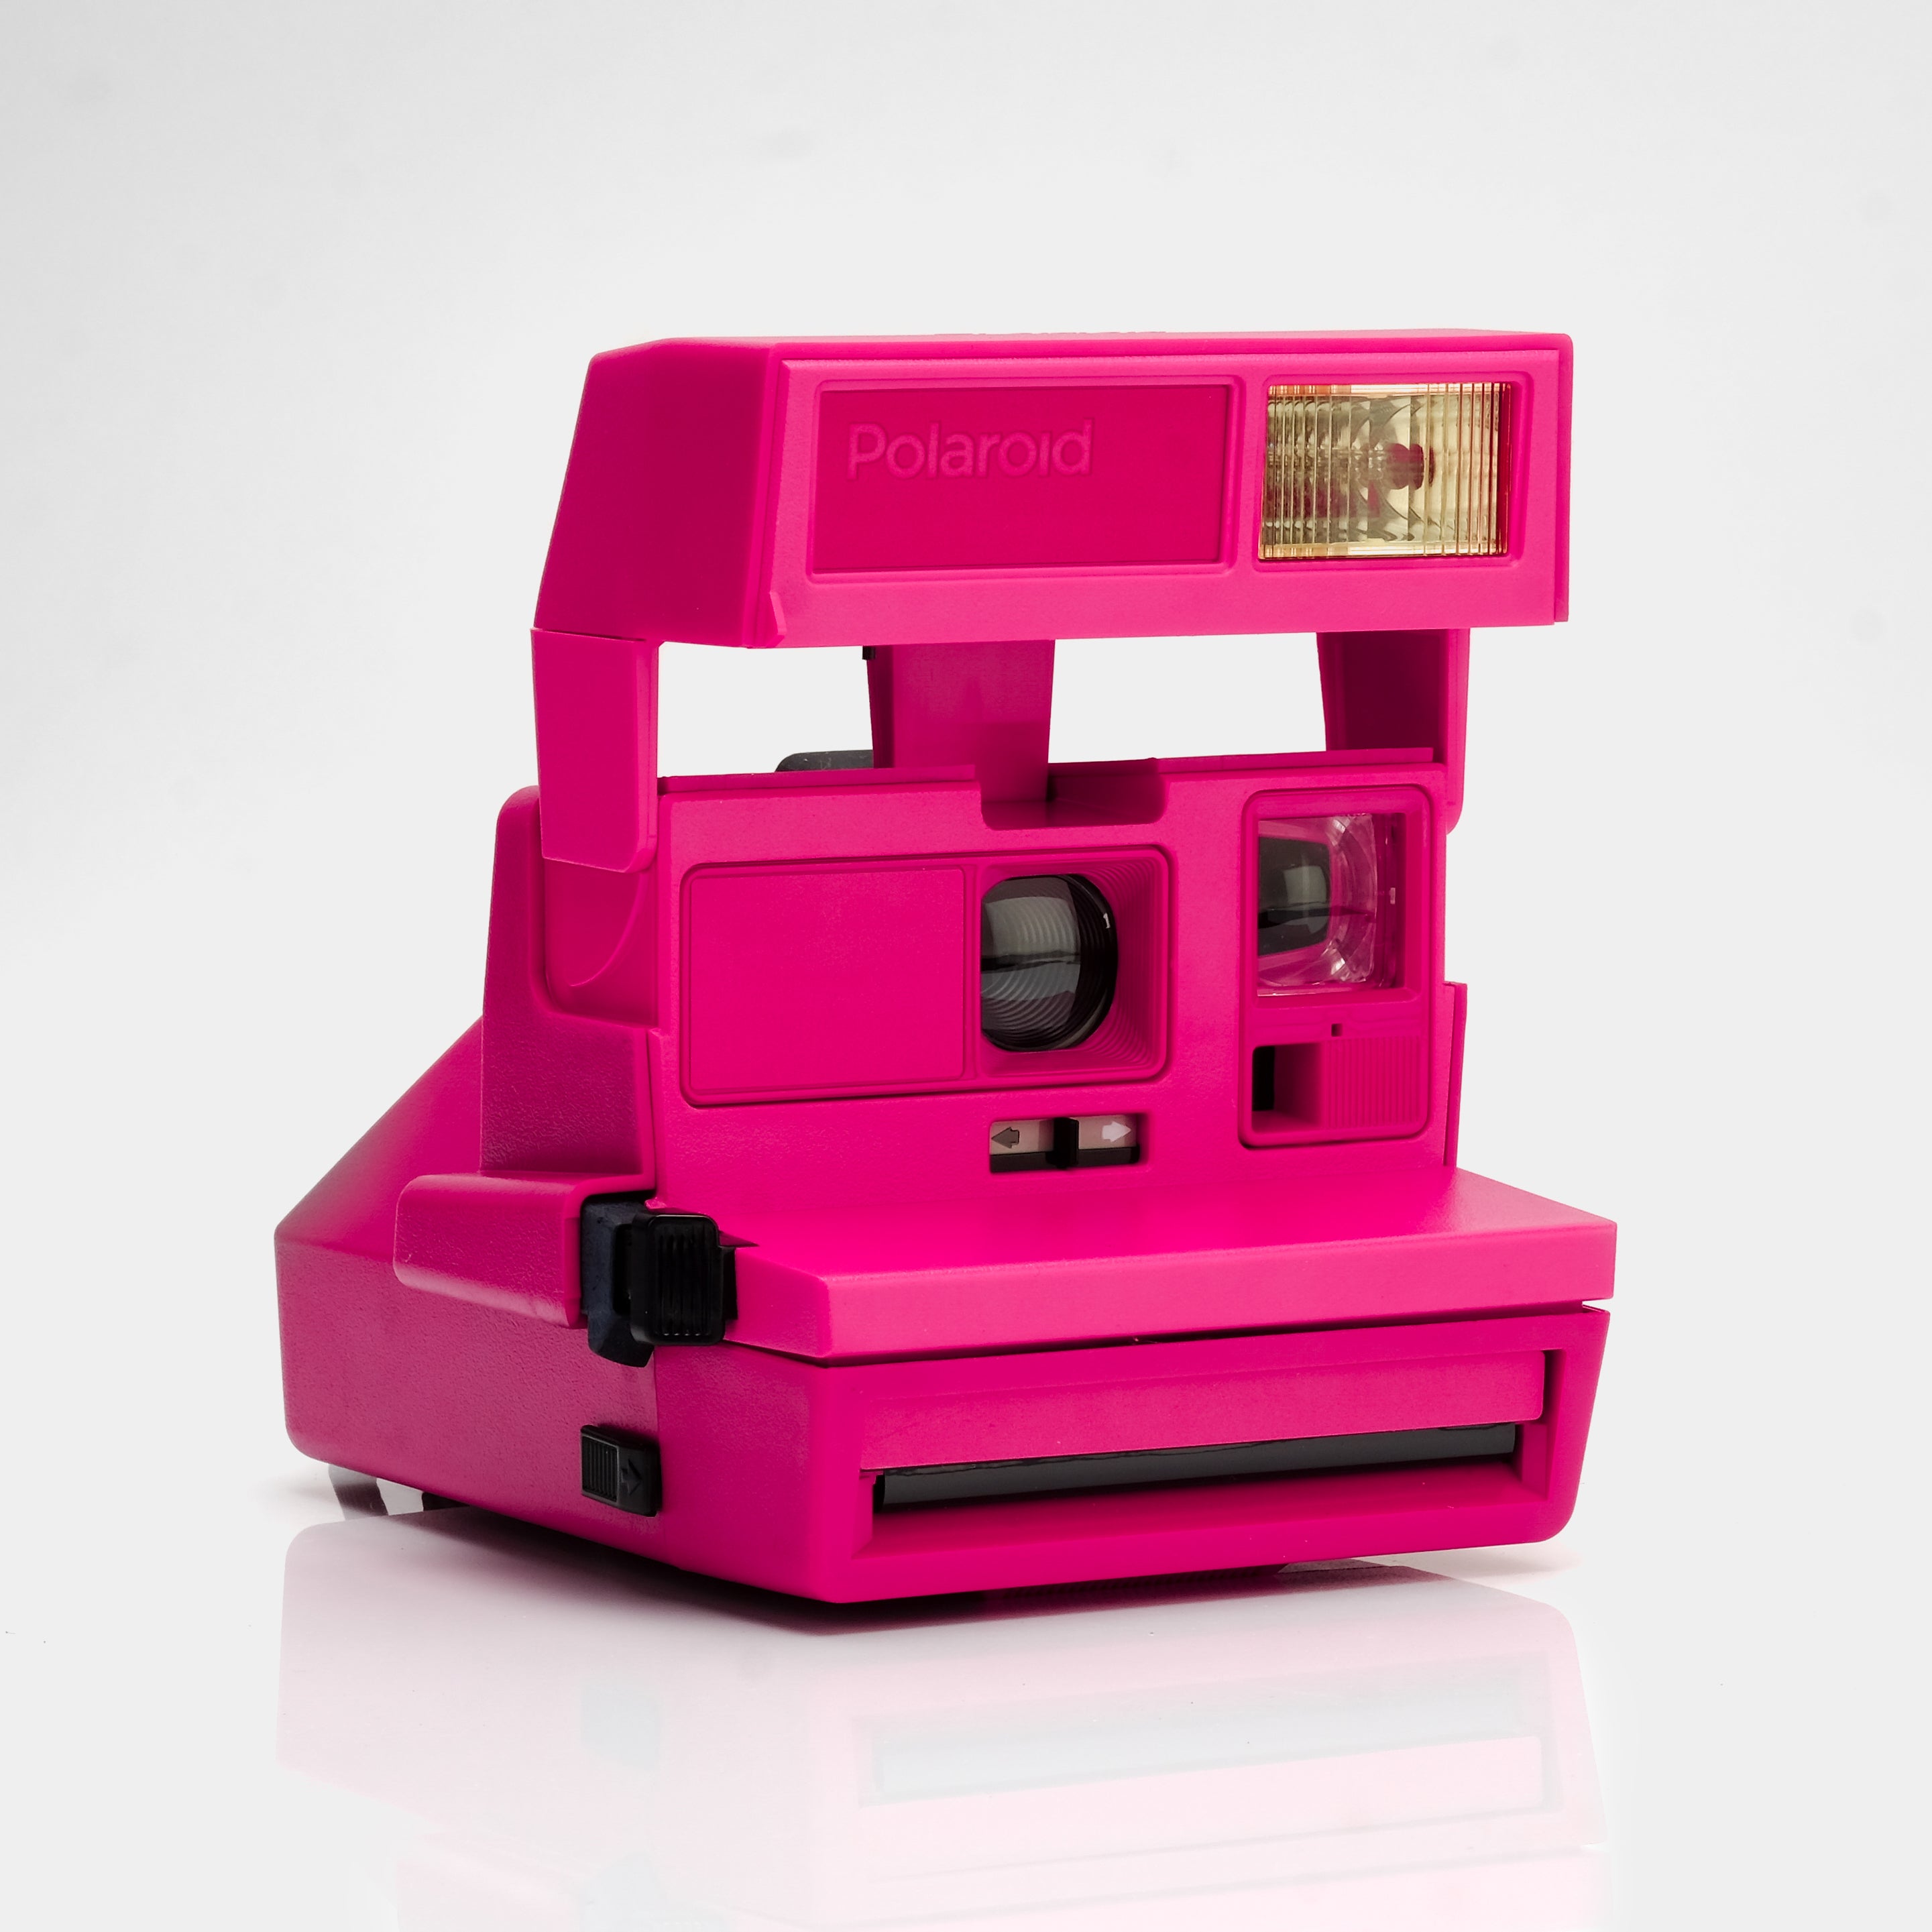 Polaroid 600 Marrakesh Pink Instant Film Camera